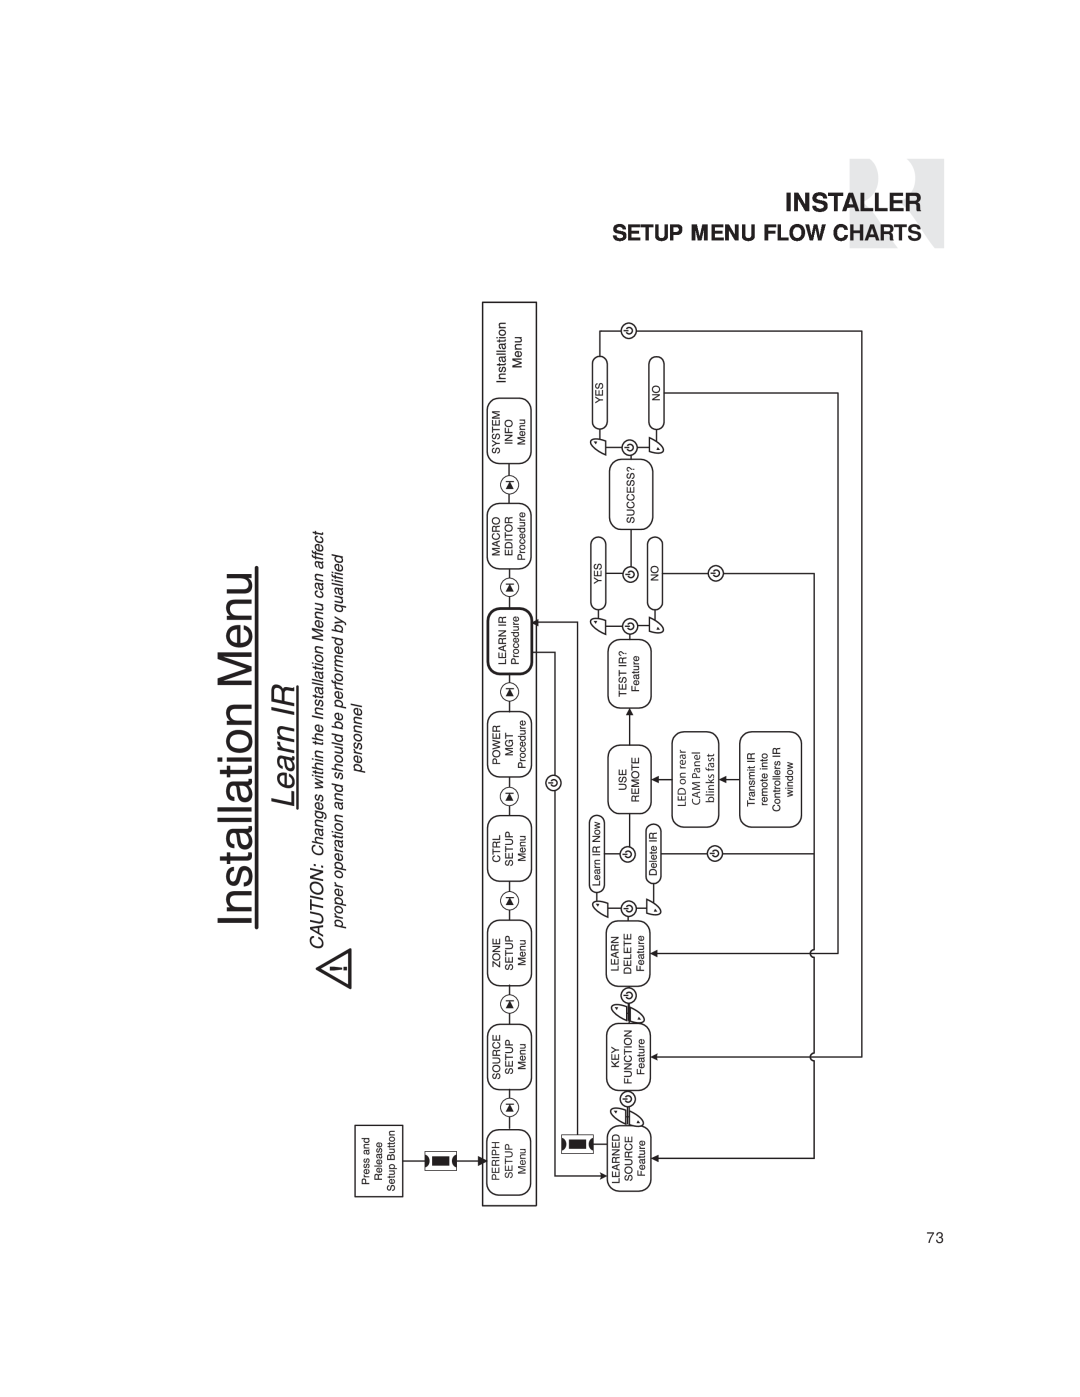 Russound CAM6.6T-S1 instruction manual Installer, Setup Menu Flow Charts, LED on rear, CAM Panel, blinks fast 